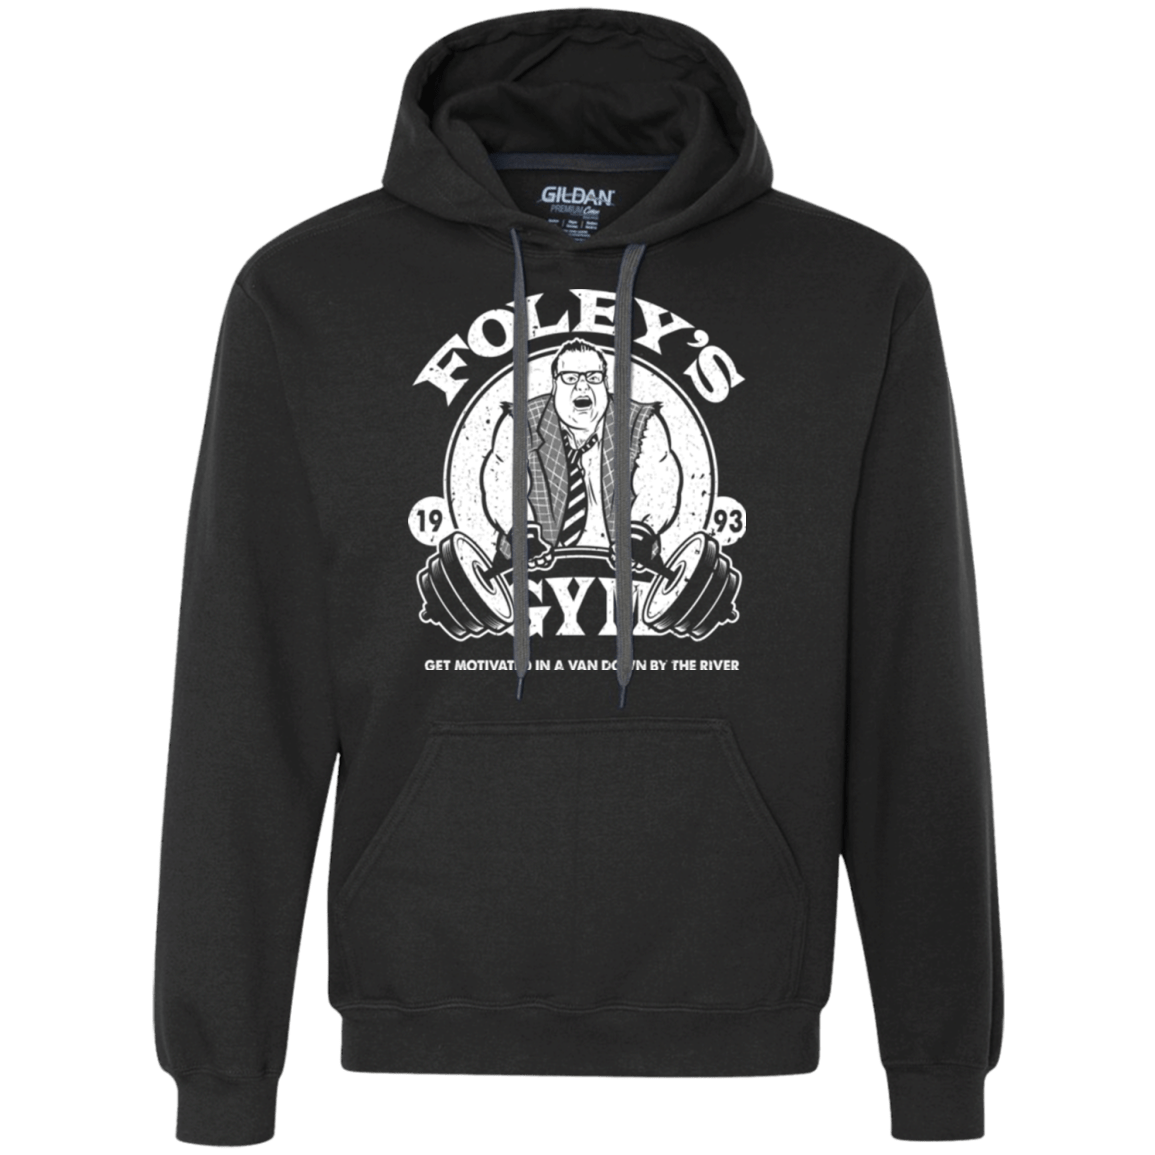 Sweatshirts Black / Small Foleys Gym Premium Fleece Hoodie